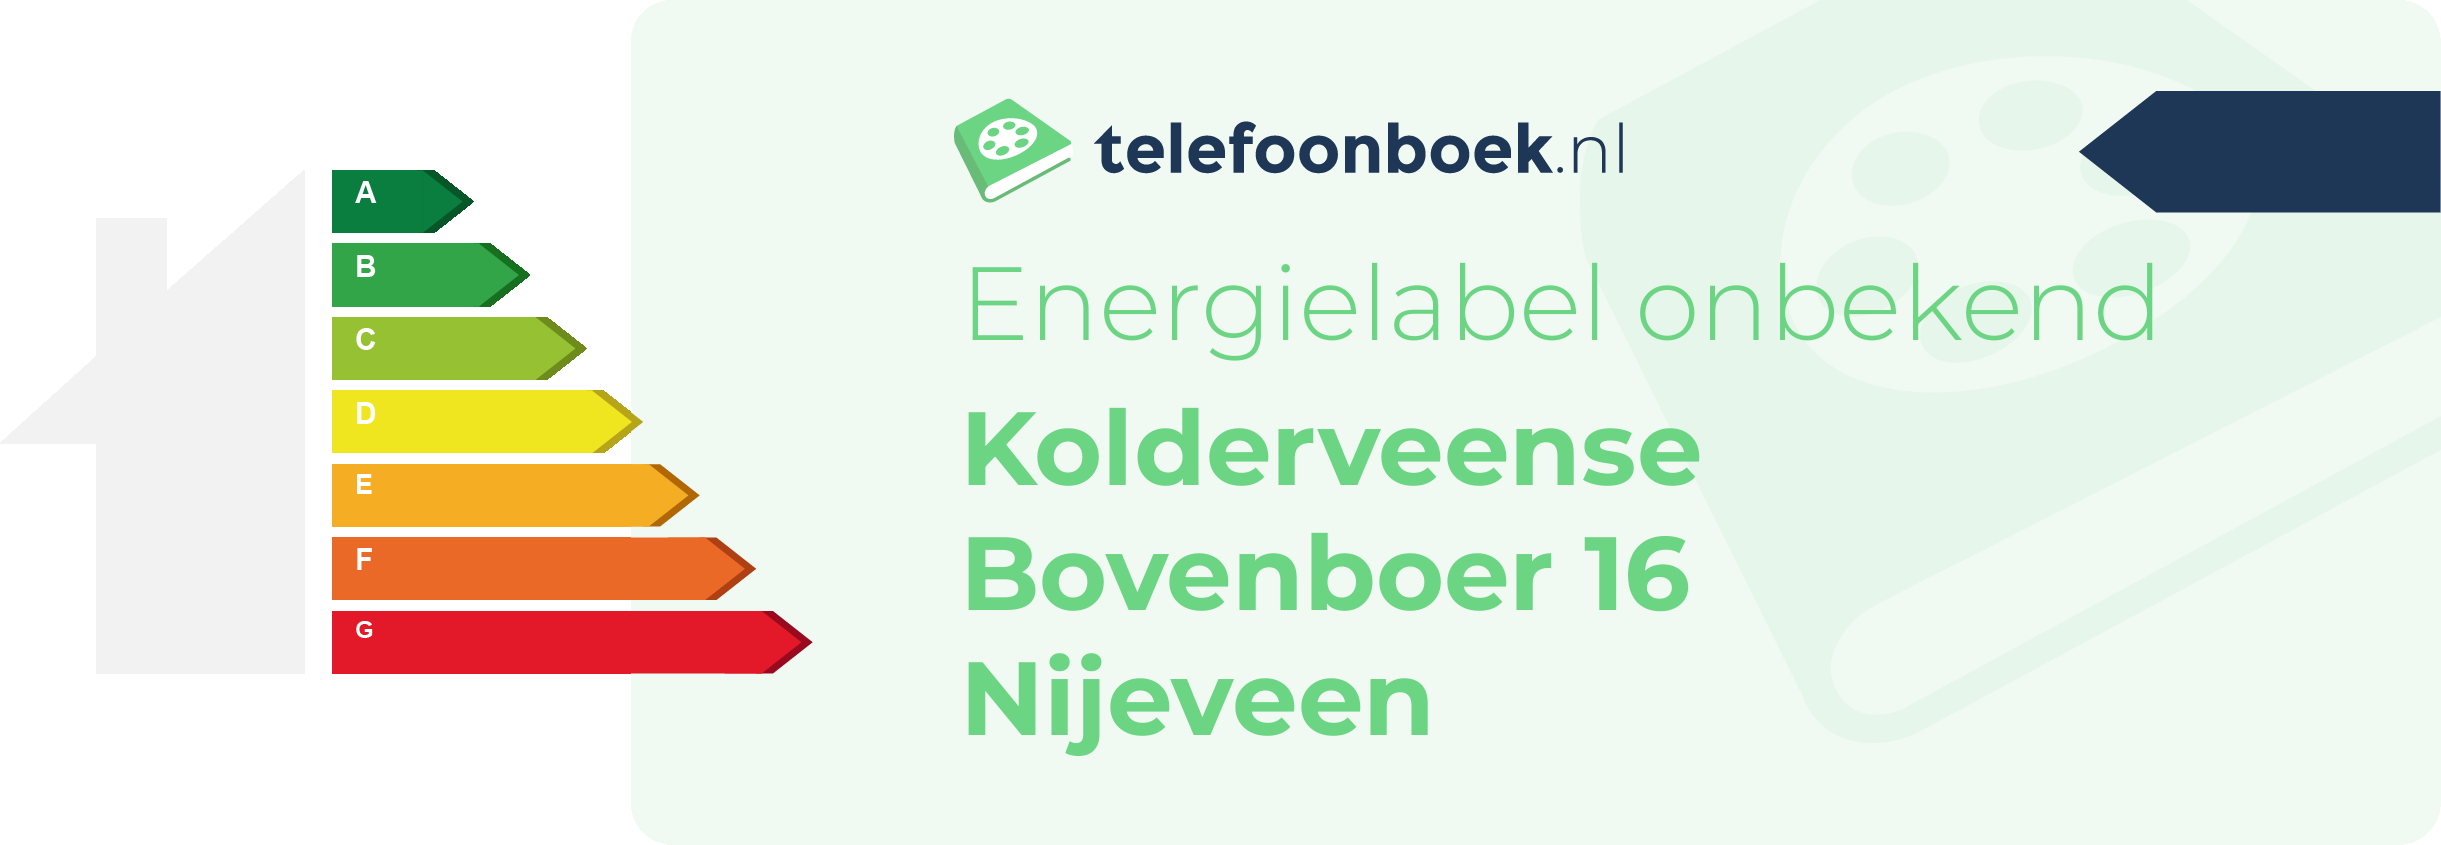 Energielabel Kolderveense Bovenboer 16 Nijeveen